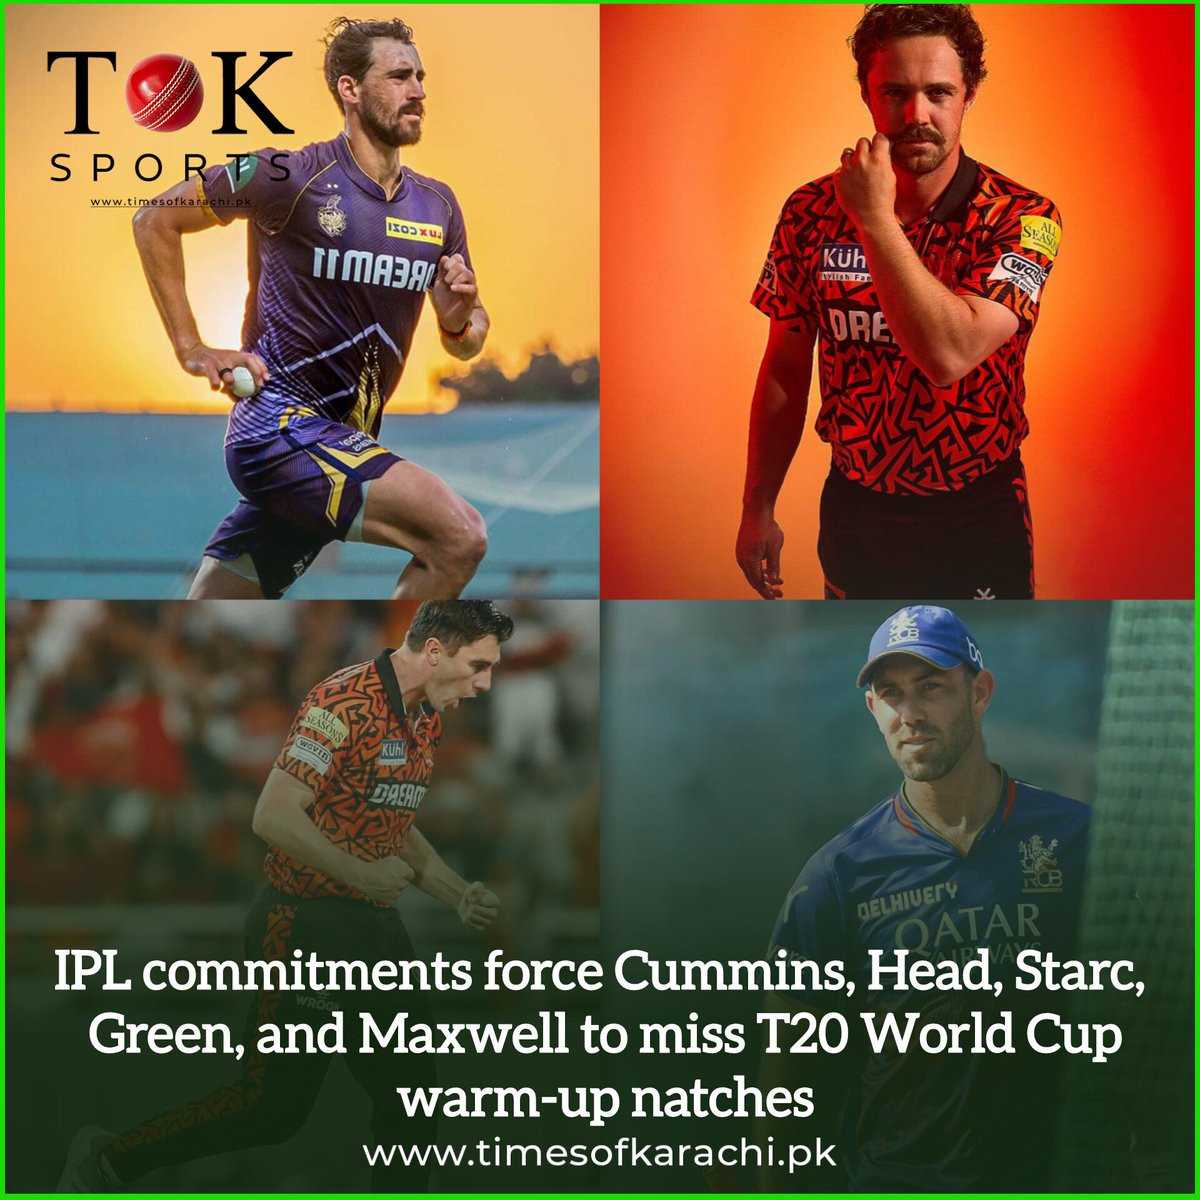 Pat Cummins, Travis Head, Mitchell Starc, Cameron Green, and Glenn Maxwell will miss the T20 World Cup warm-up matches due to their commitments in the IPL.

#TOKSports #MitchellStarc #TravisHead #PattCummins #GlennMaxwell #T20WorldCup